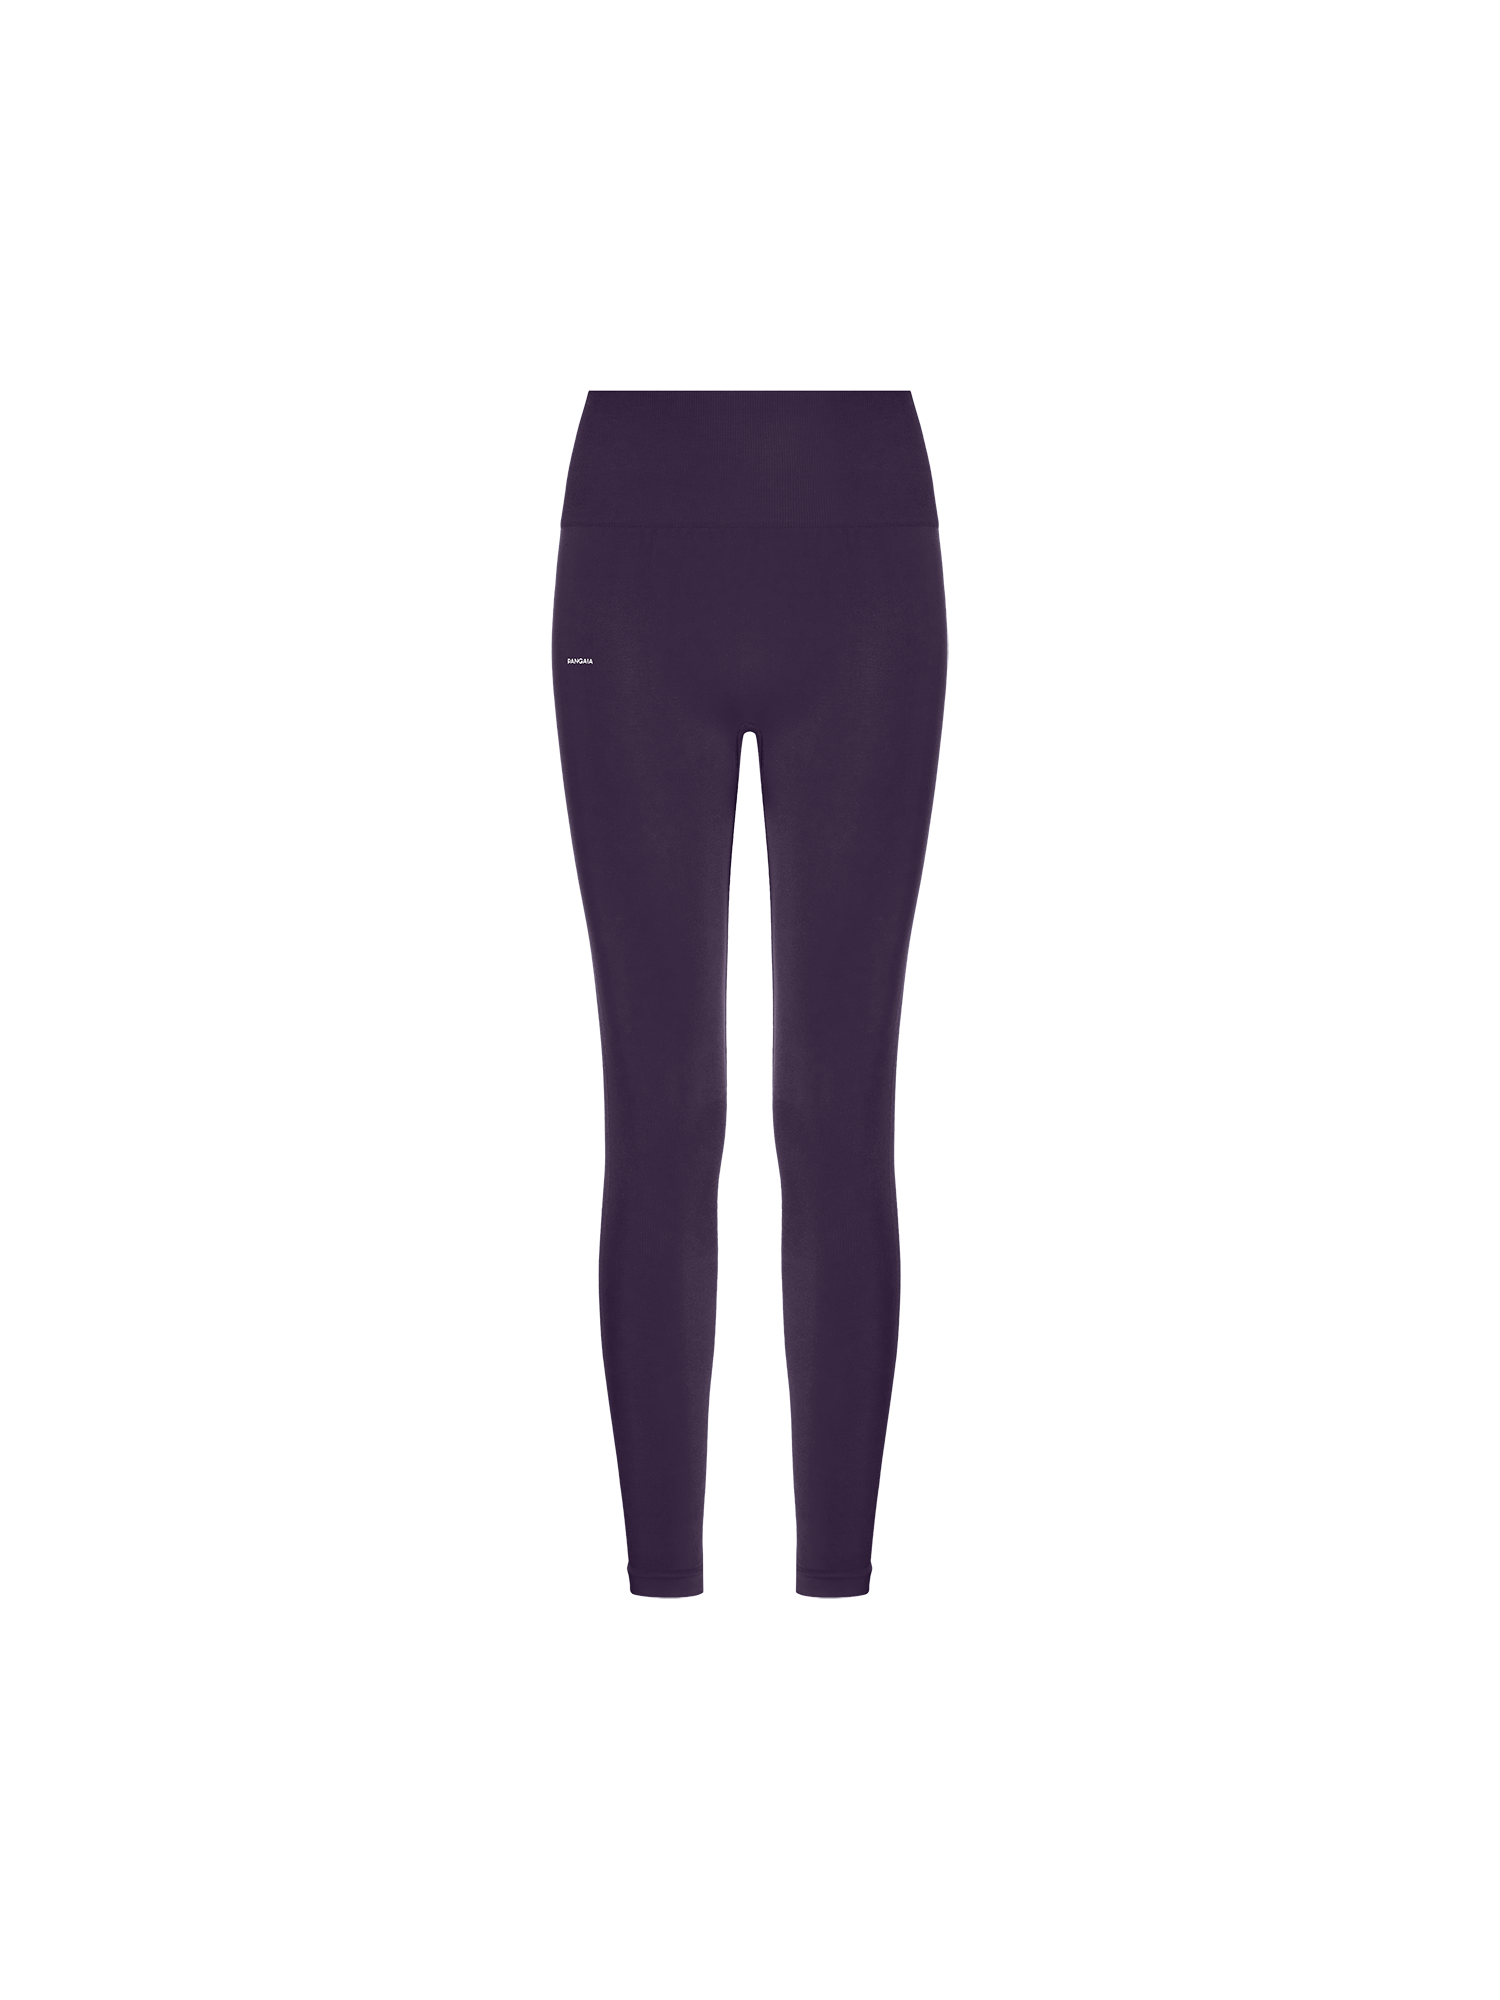 PANGAIA - Women's Plant-Stretch Compressive Leggings - Blackberry Purple XL